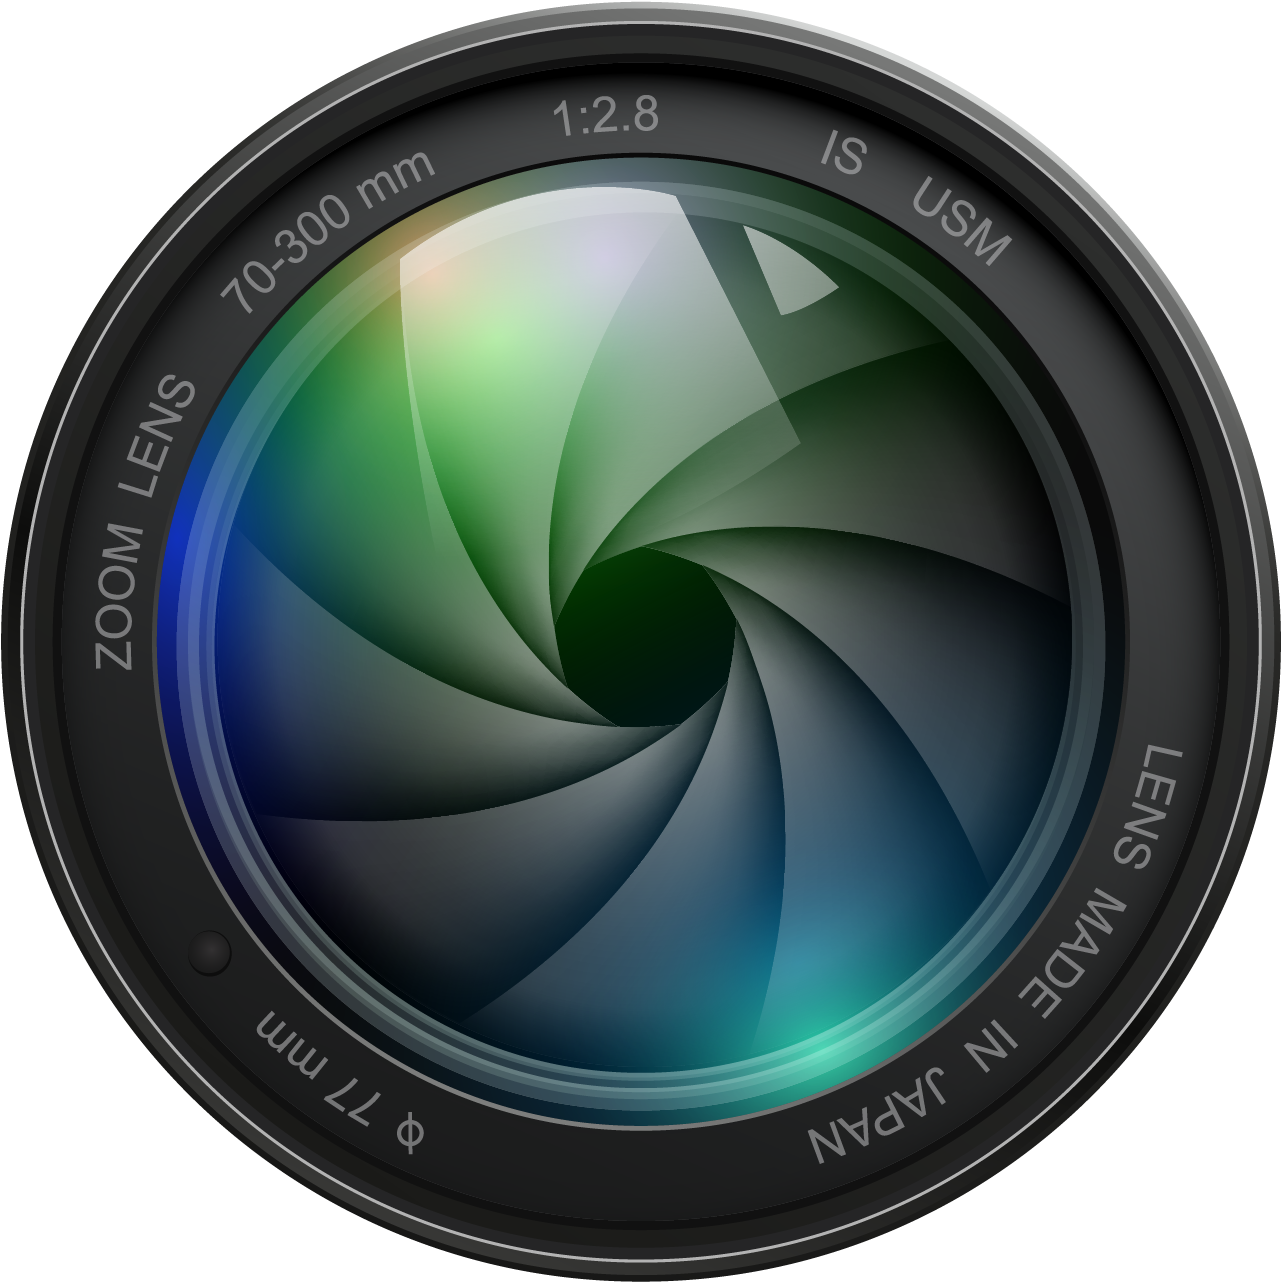 Camera Lens Aperture Design PNG image